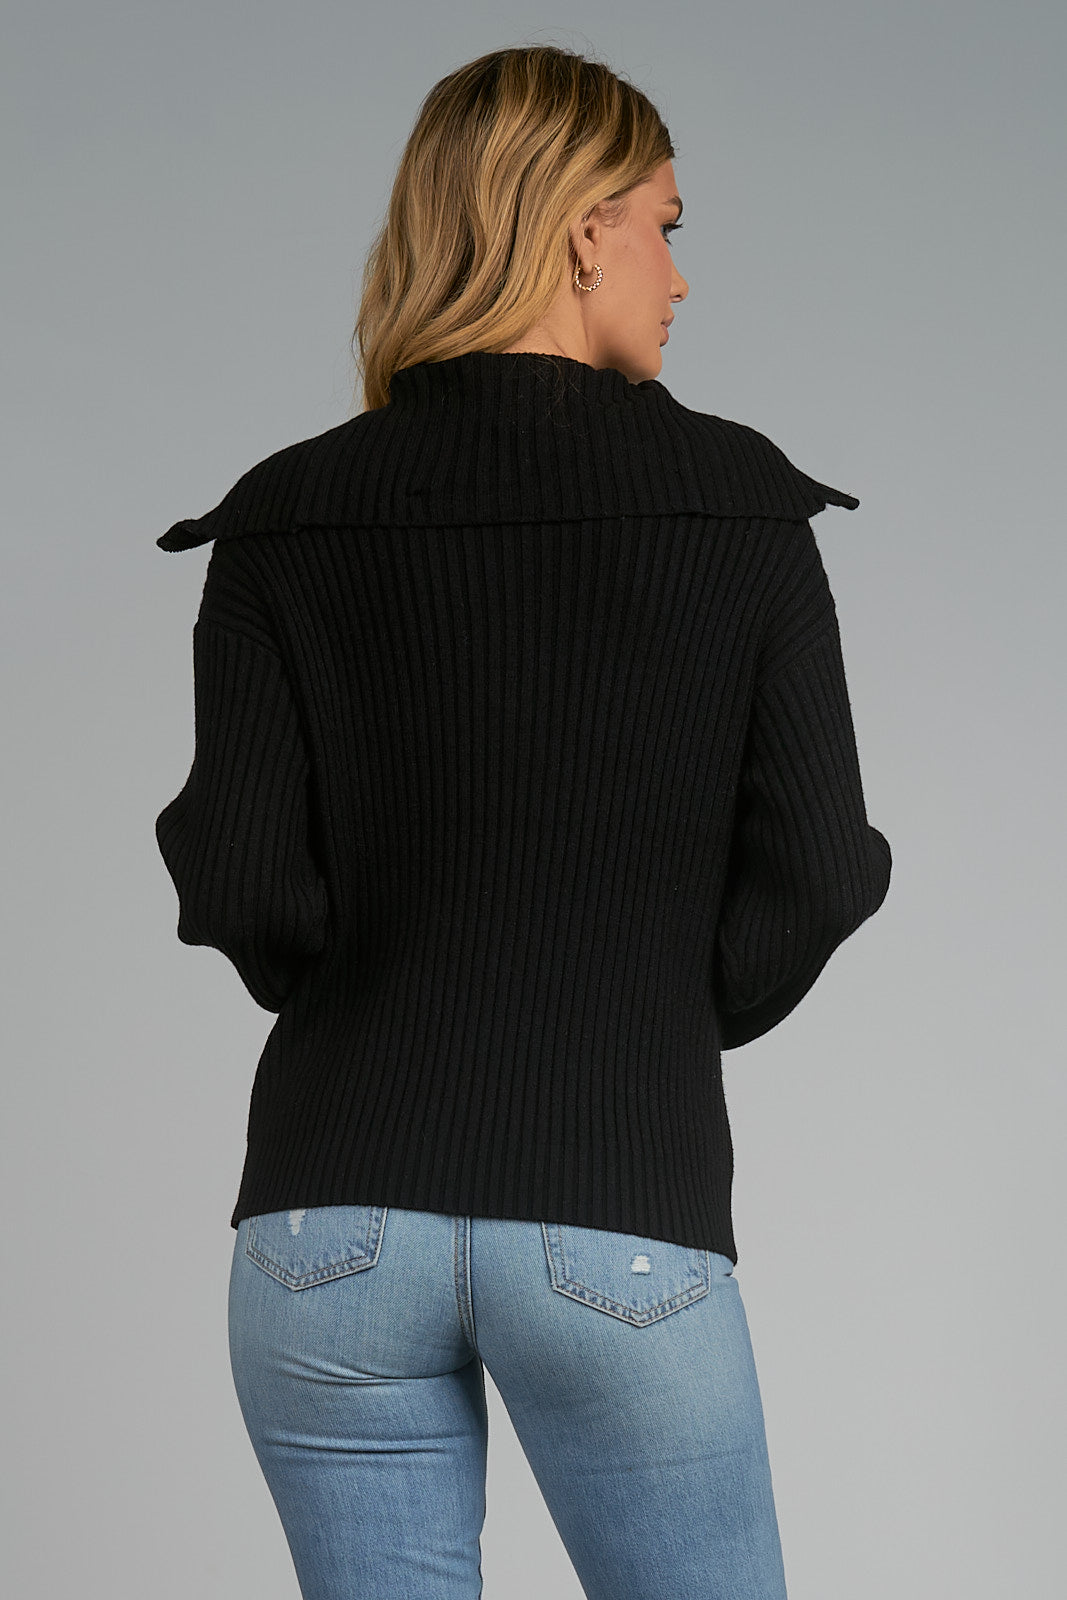 Kourt Zip Sweater